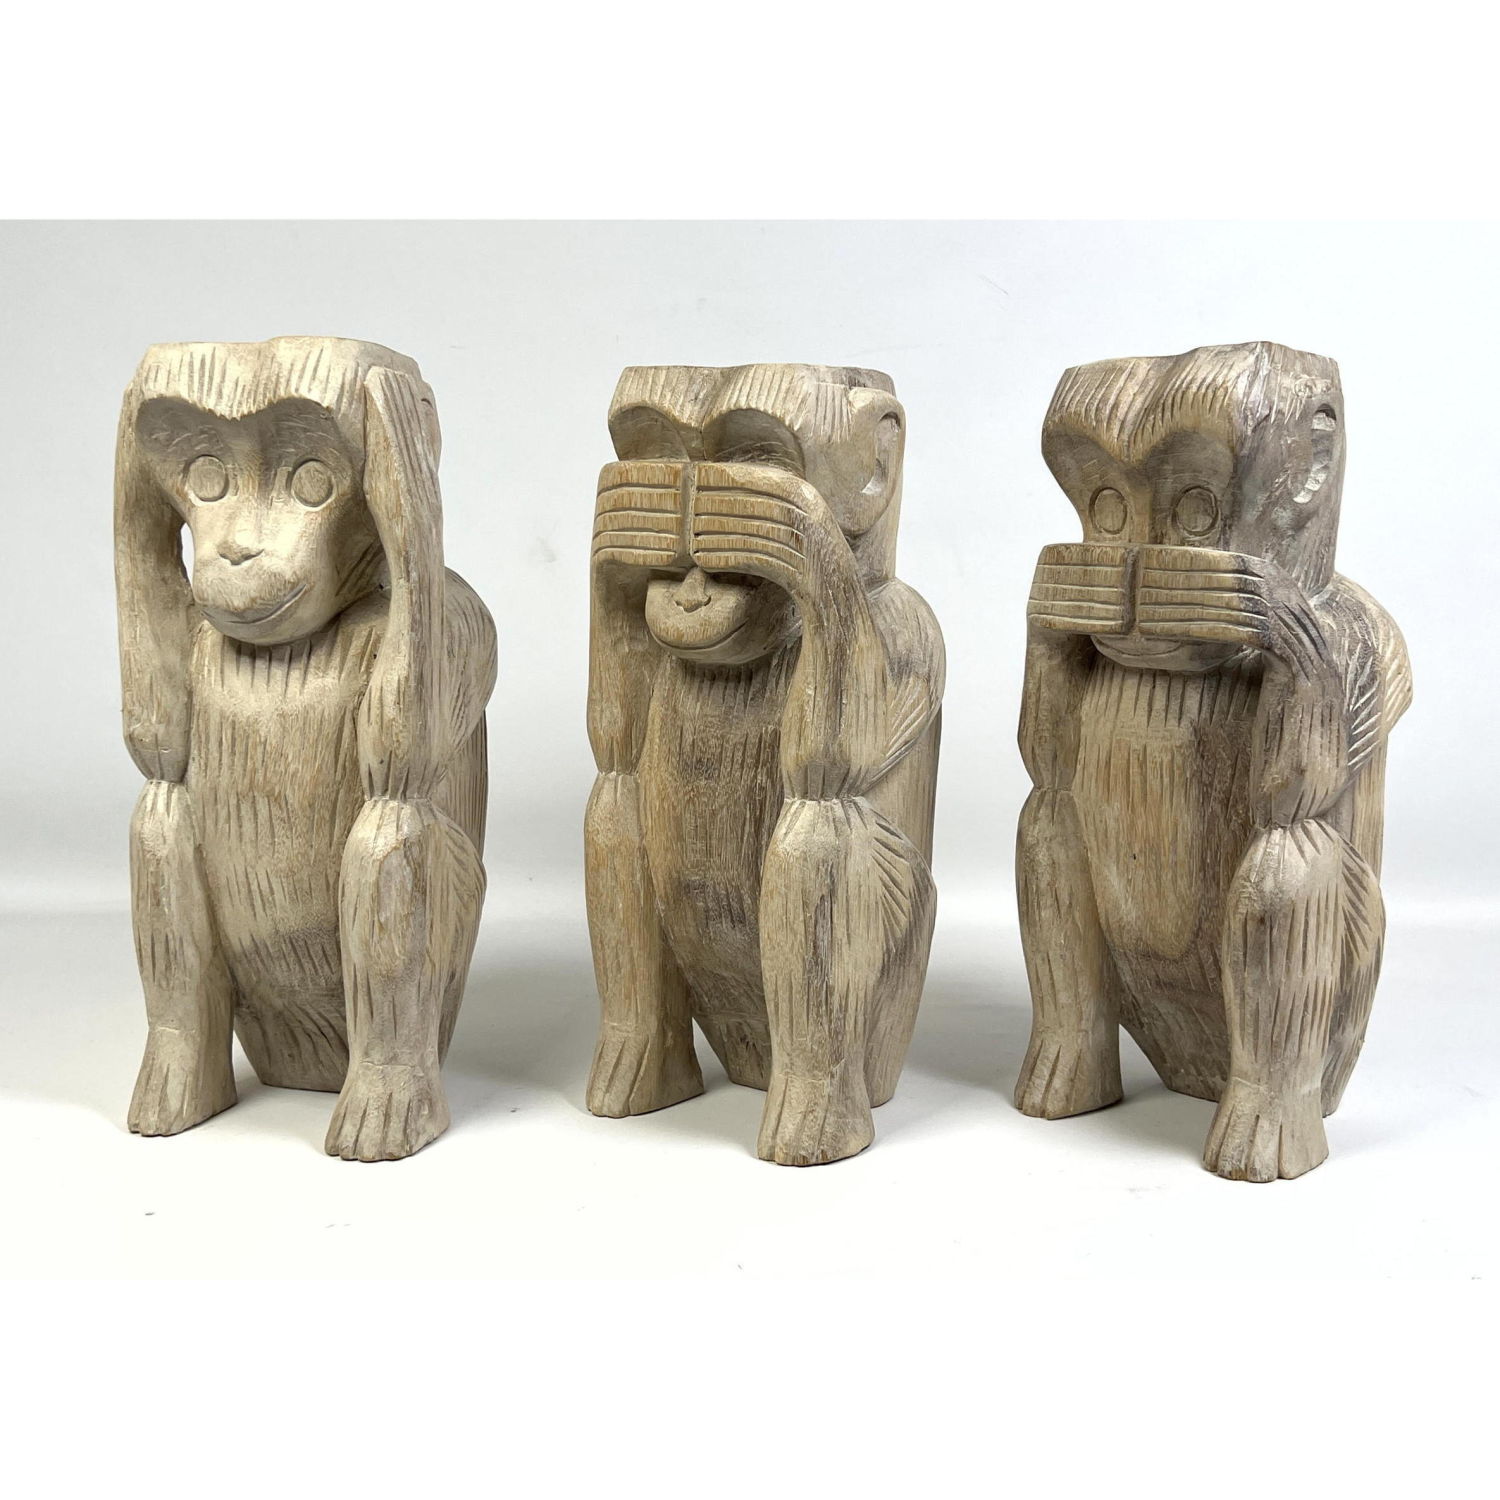 Three Carved Wood Monkey Figures  2b9071